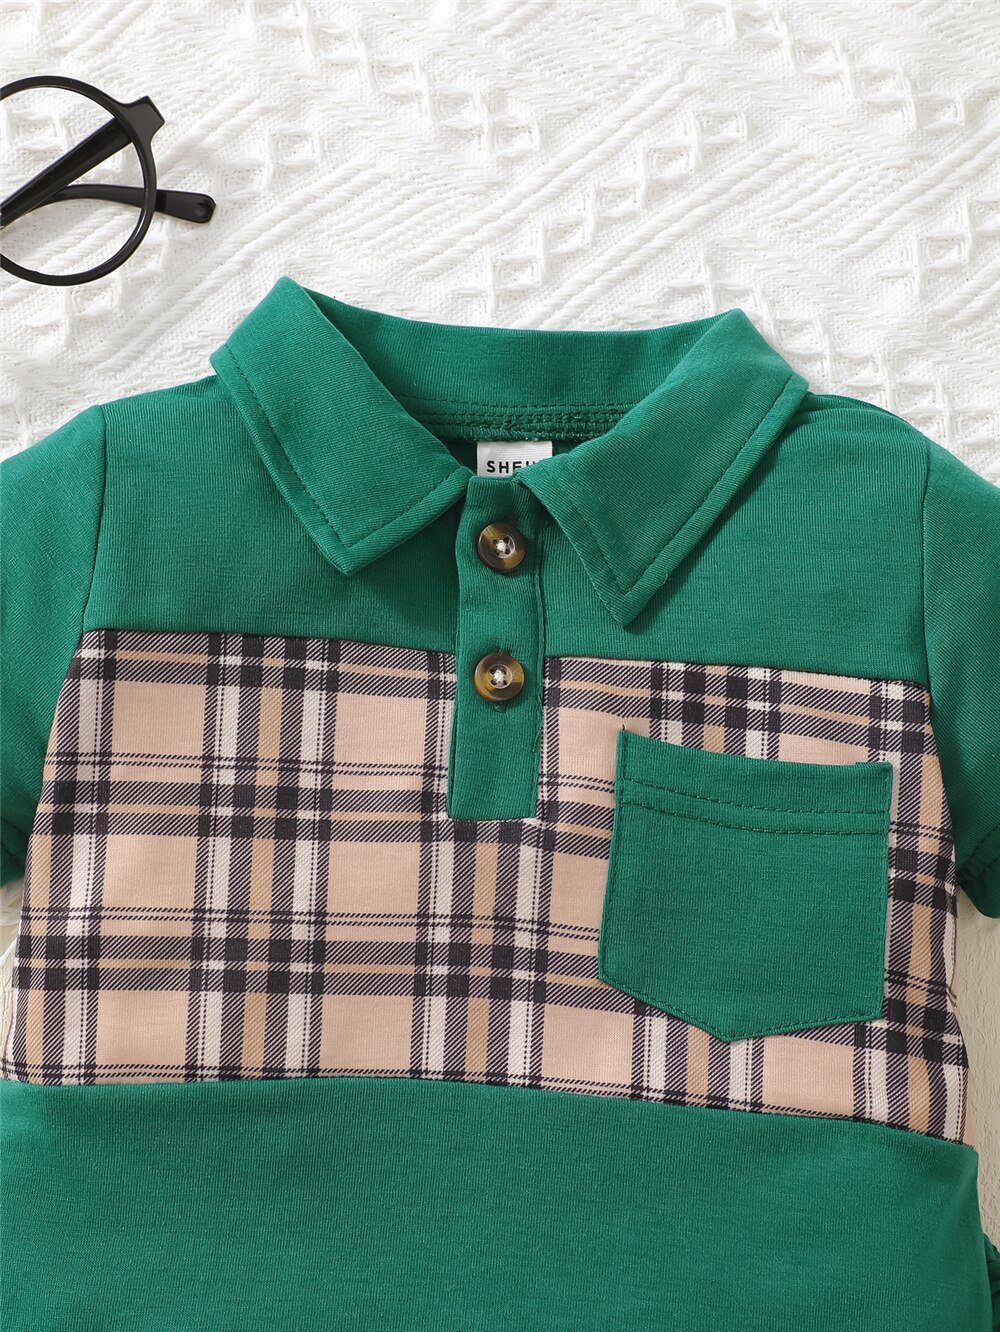 3-24Months-Infant-Baby-Boy-Clothing-Set-Short-Sleeves-Green-T-shirt-Shorts-2PCS-Costume-Newborn-2